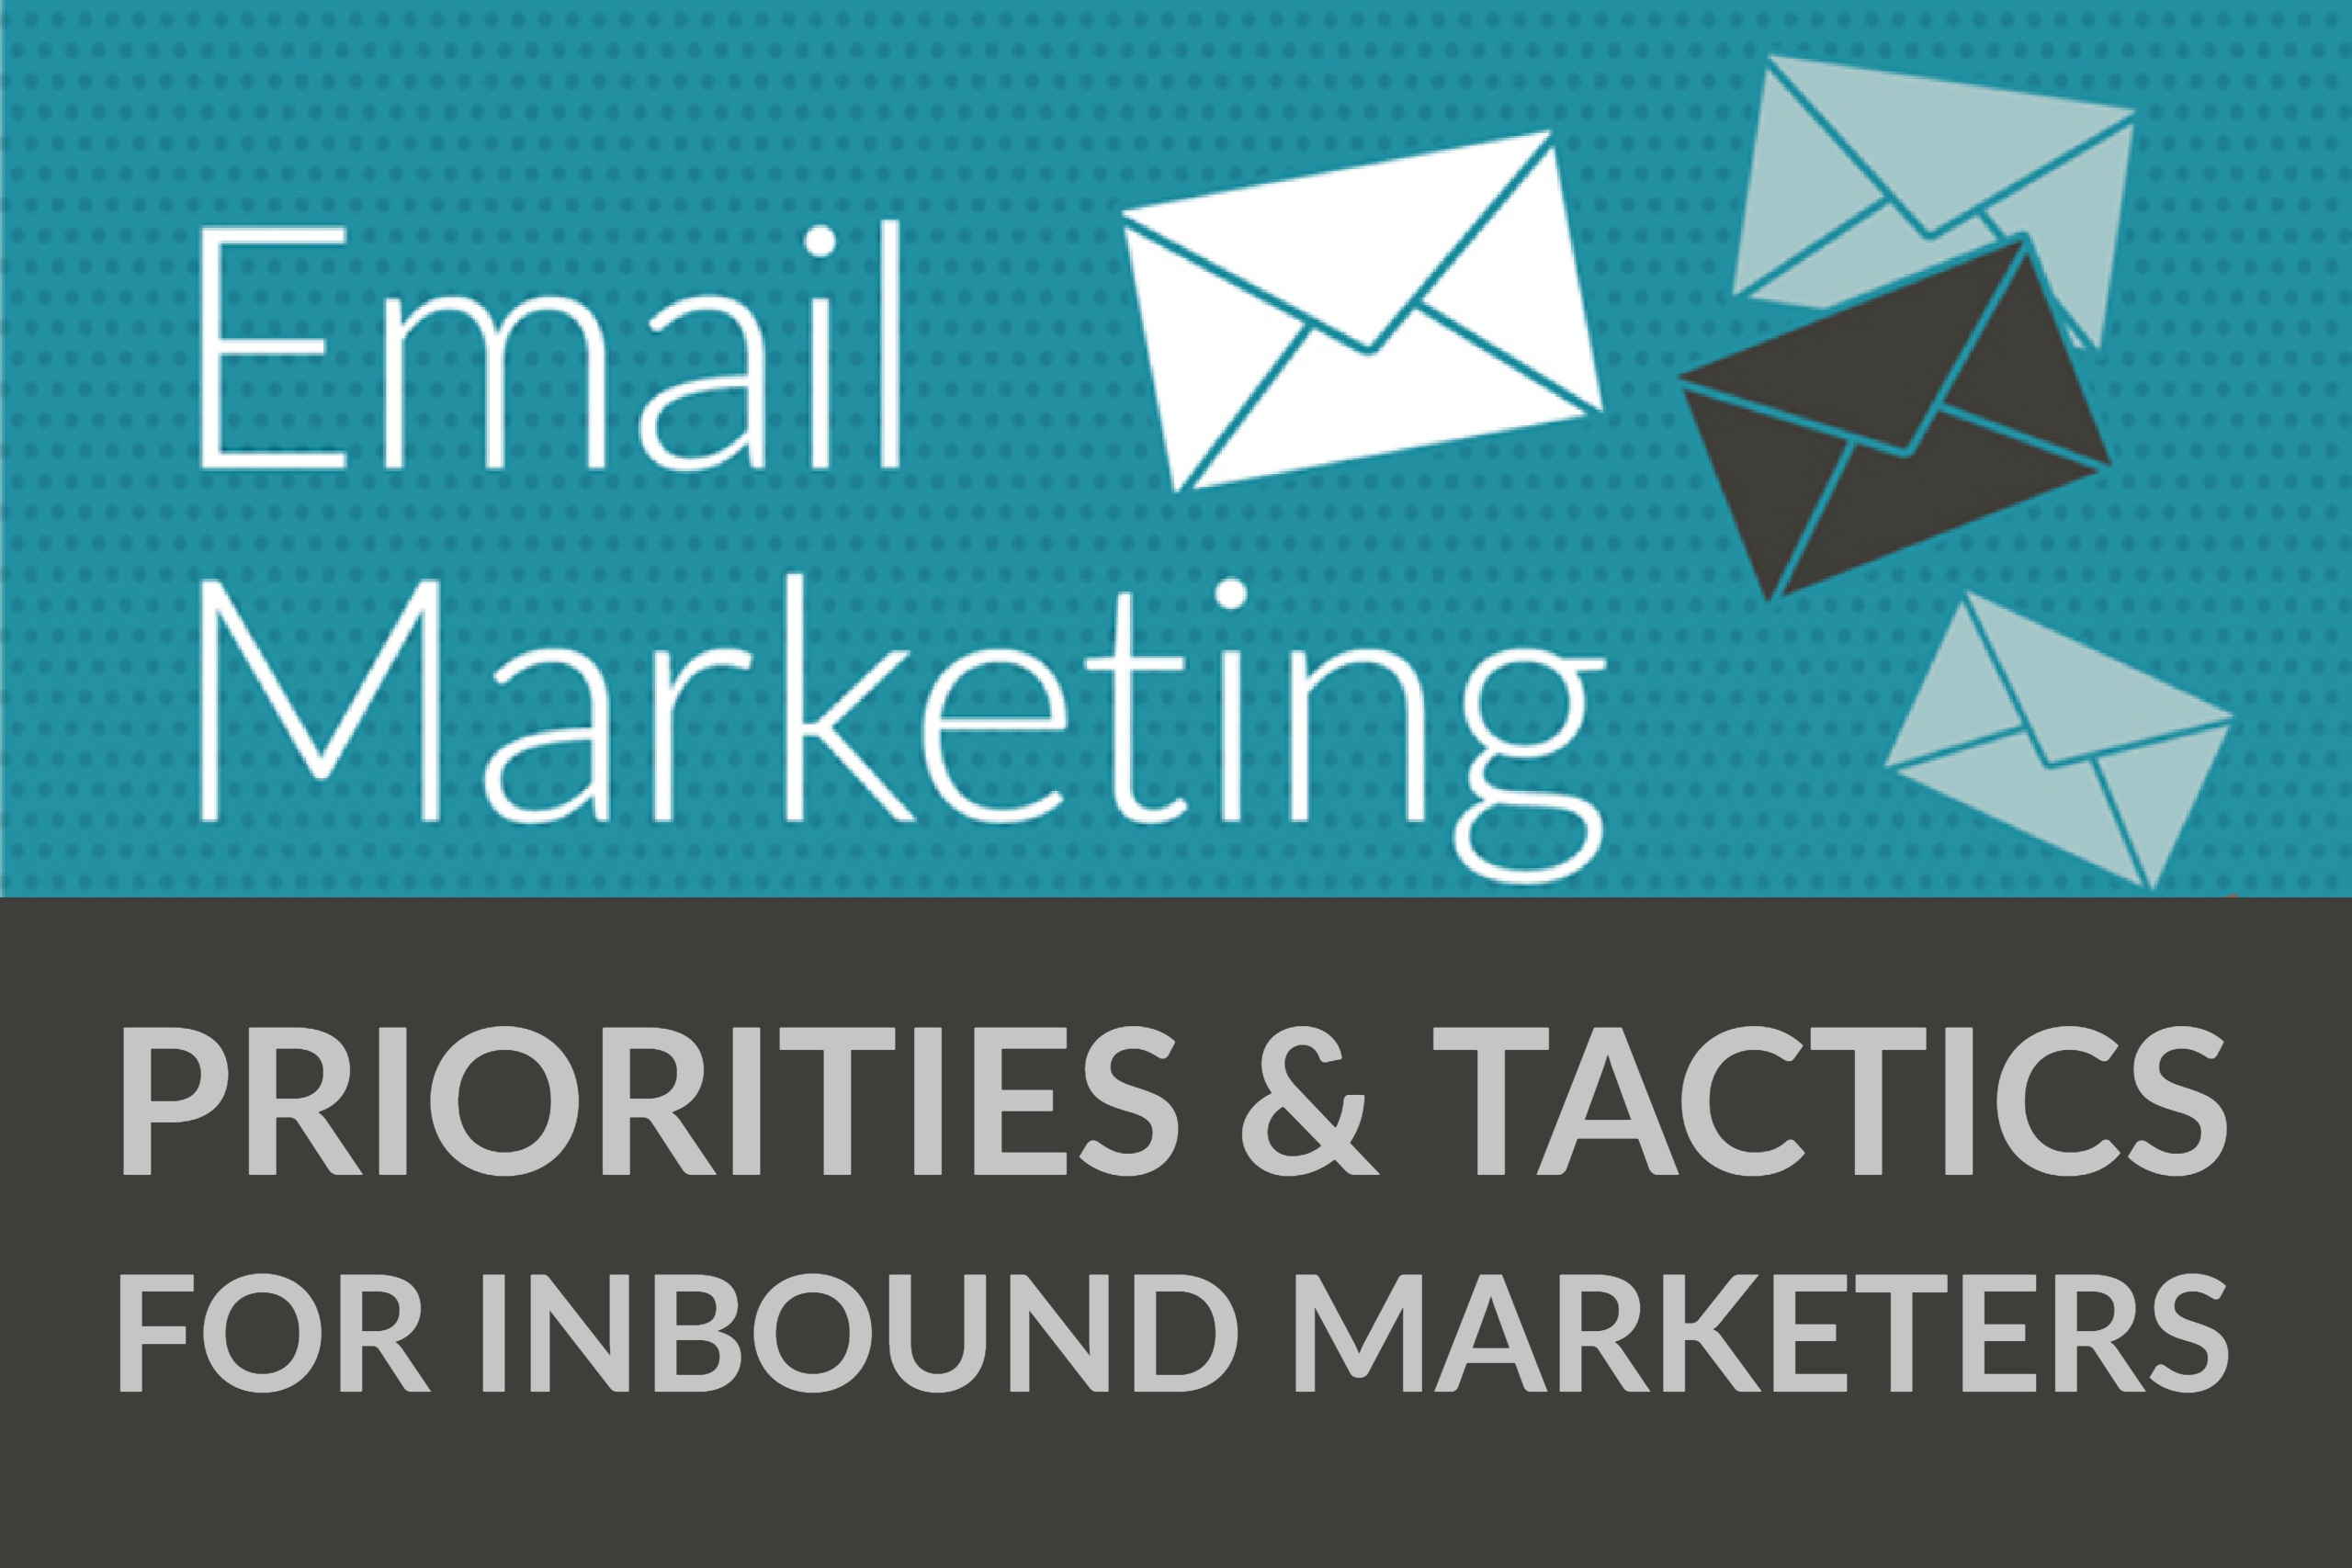 Email Marketing Priorities & Tactics for Inbound Marketers